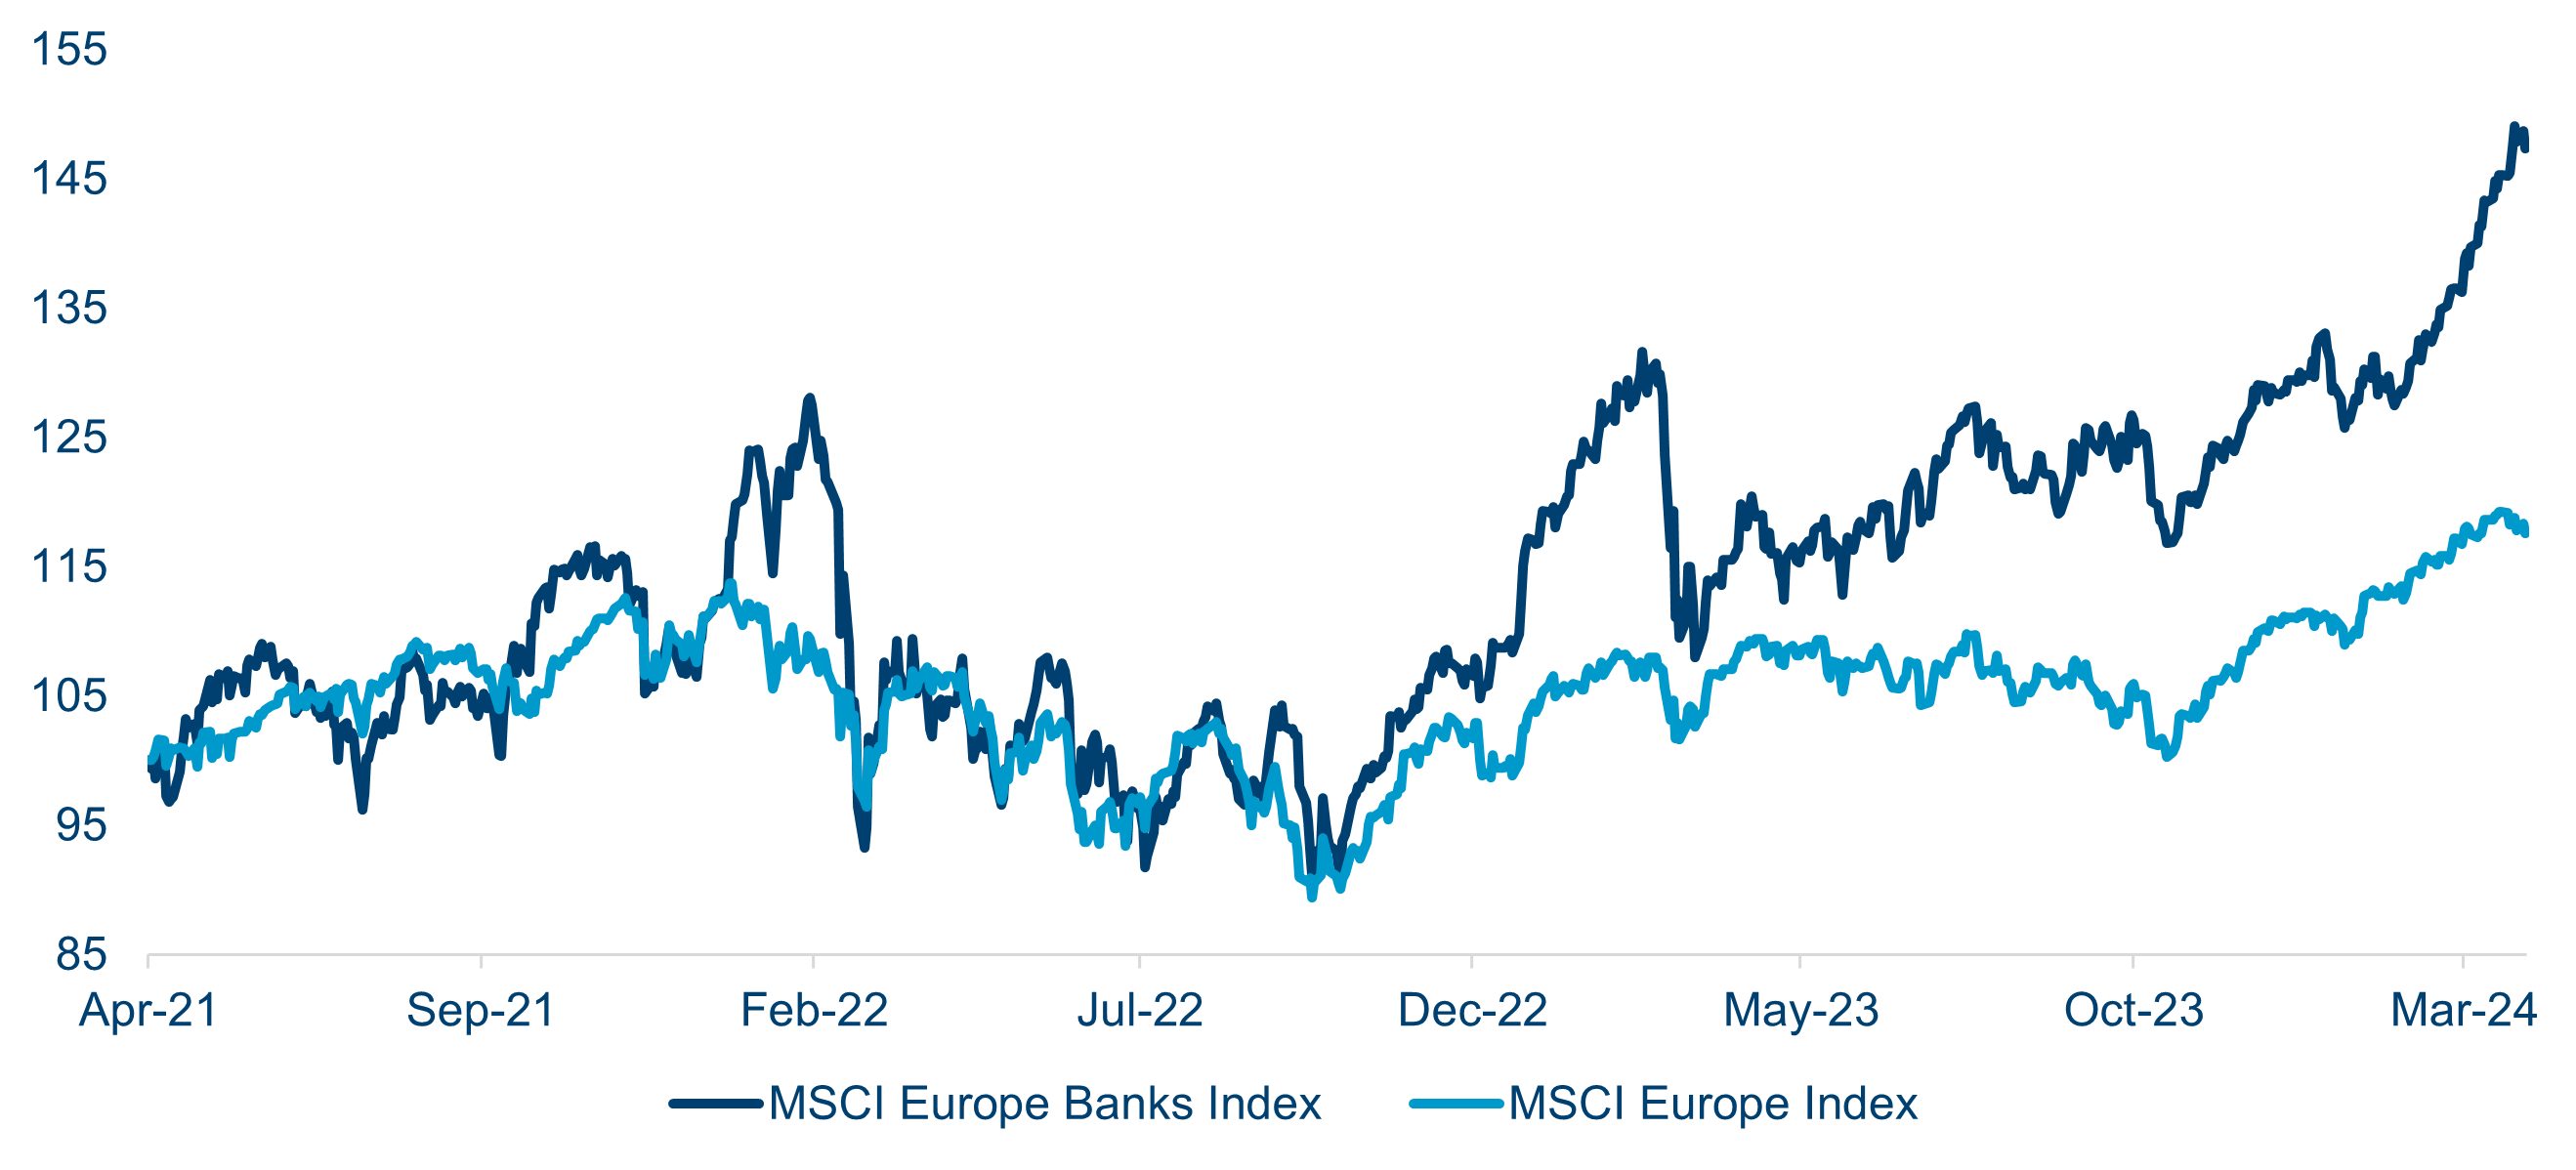 Msci Europe Banks Index Versus Msci Europe Index